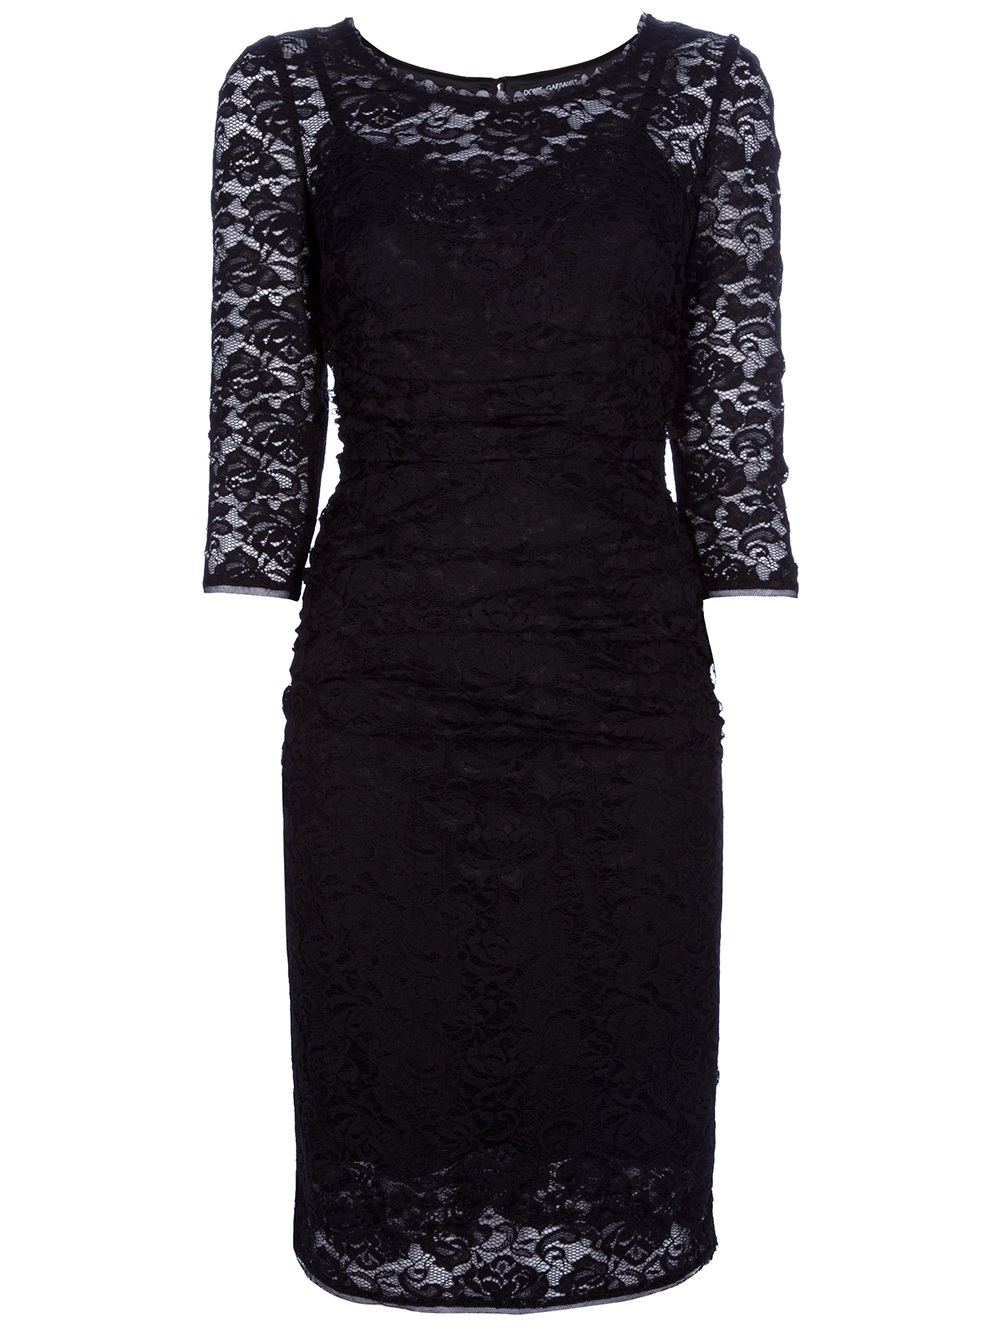 Lyst - Dolce & gabbana Lace Dress in Black